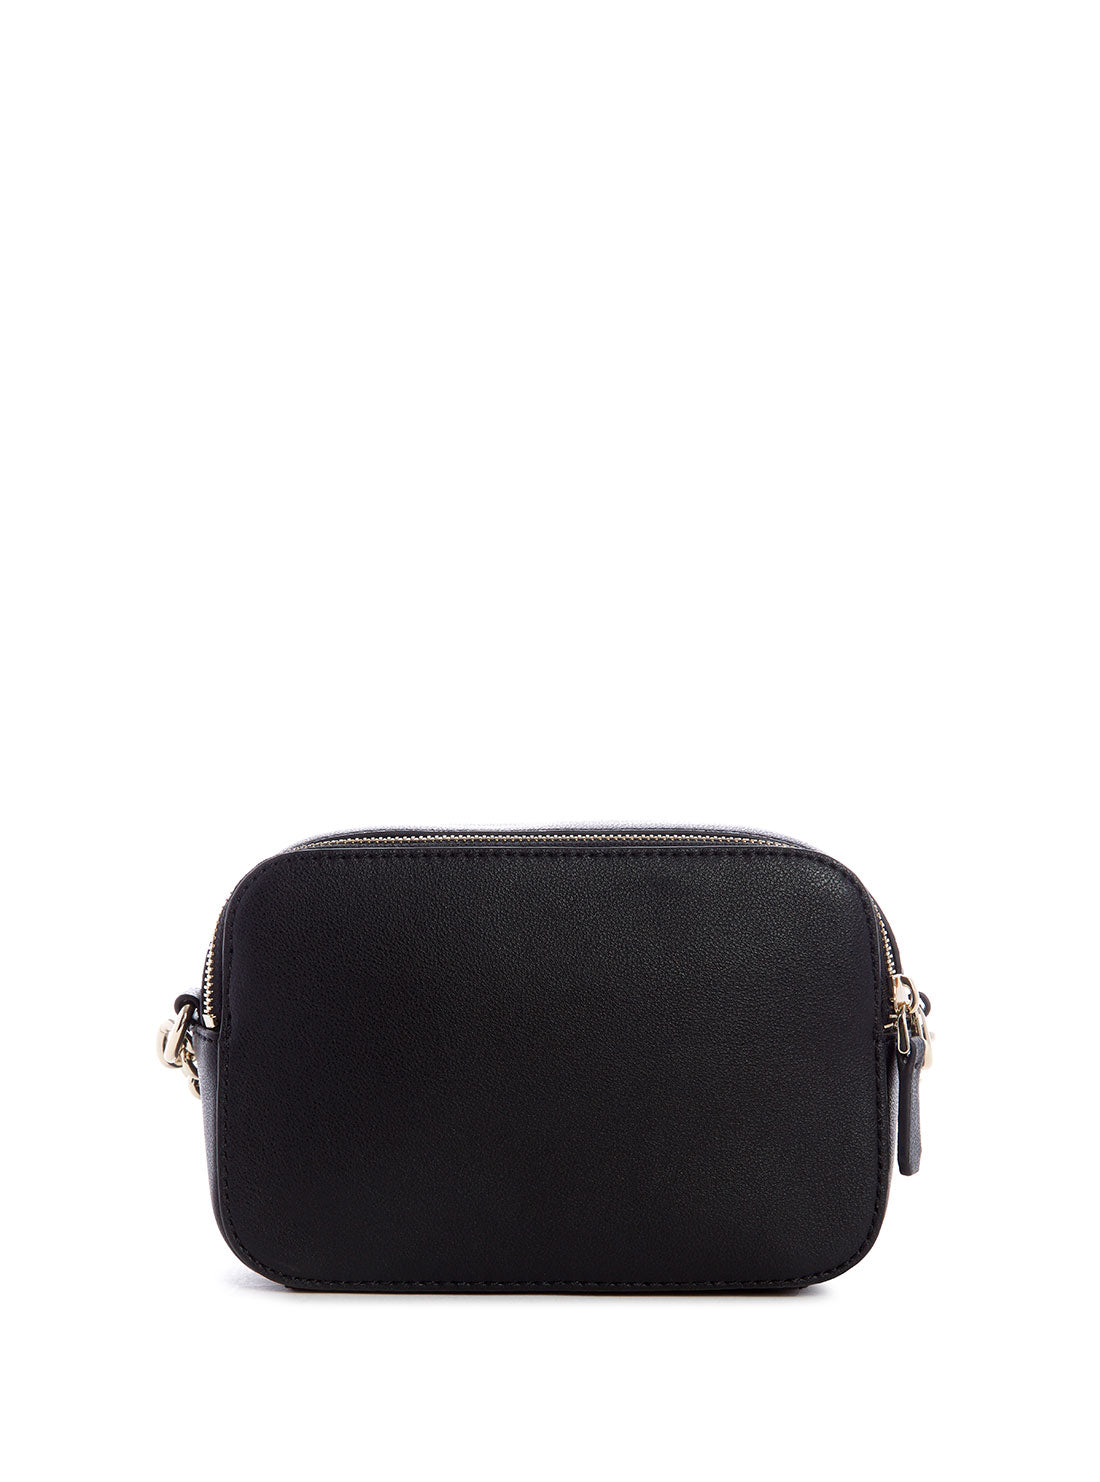 GUESS Women's Black Noelle Quattro G Crossbody Bag VE787914 Back View